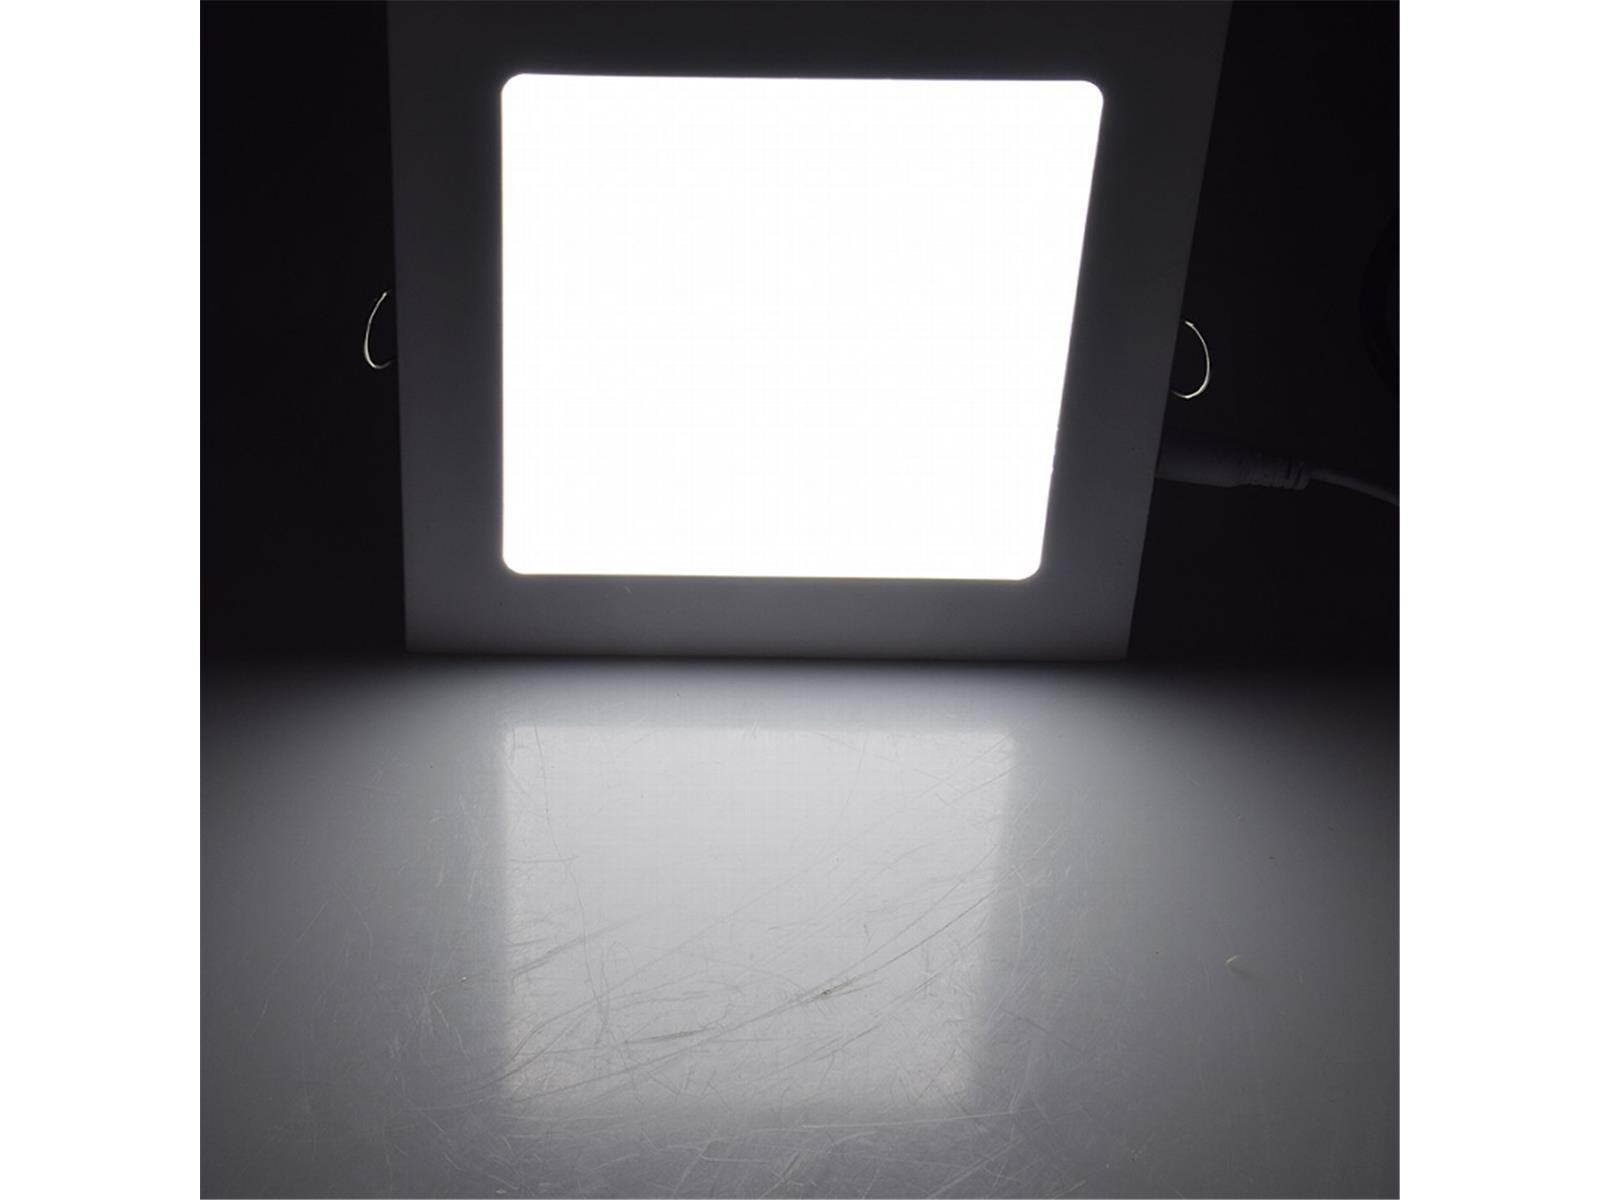 LED Licht-Panel "QCP-30Q", 30x30cm230V, 24W, 2160 Lumen,4200K /neutralweiß